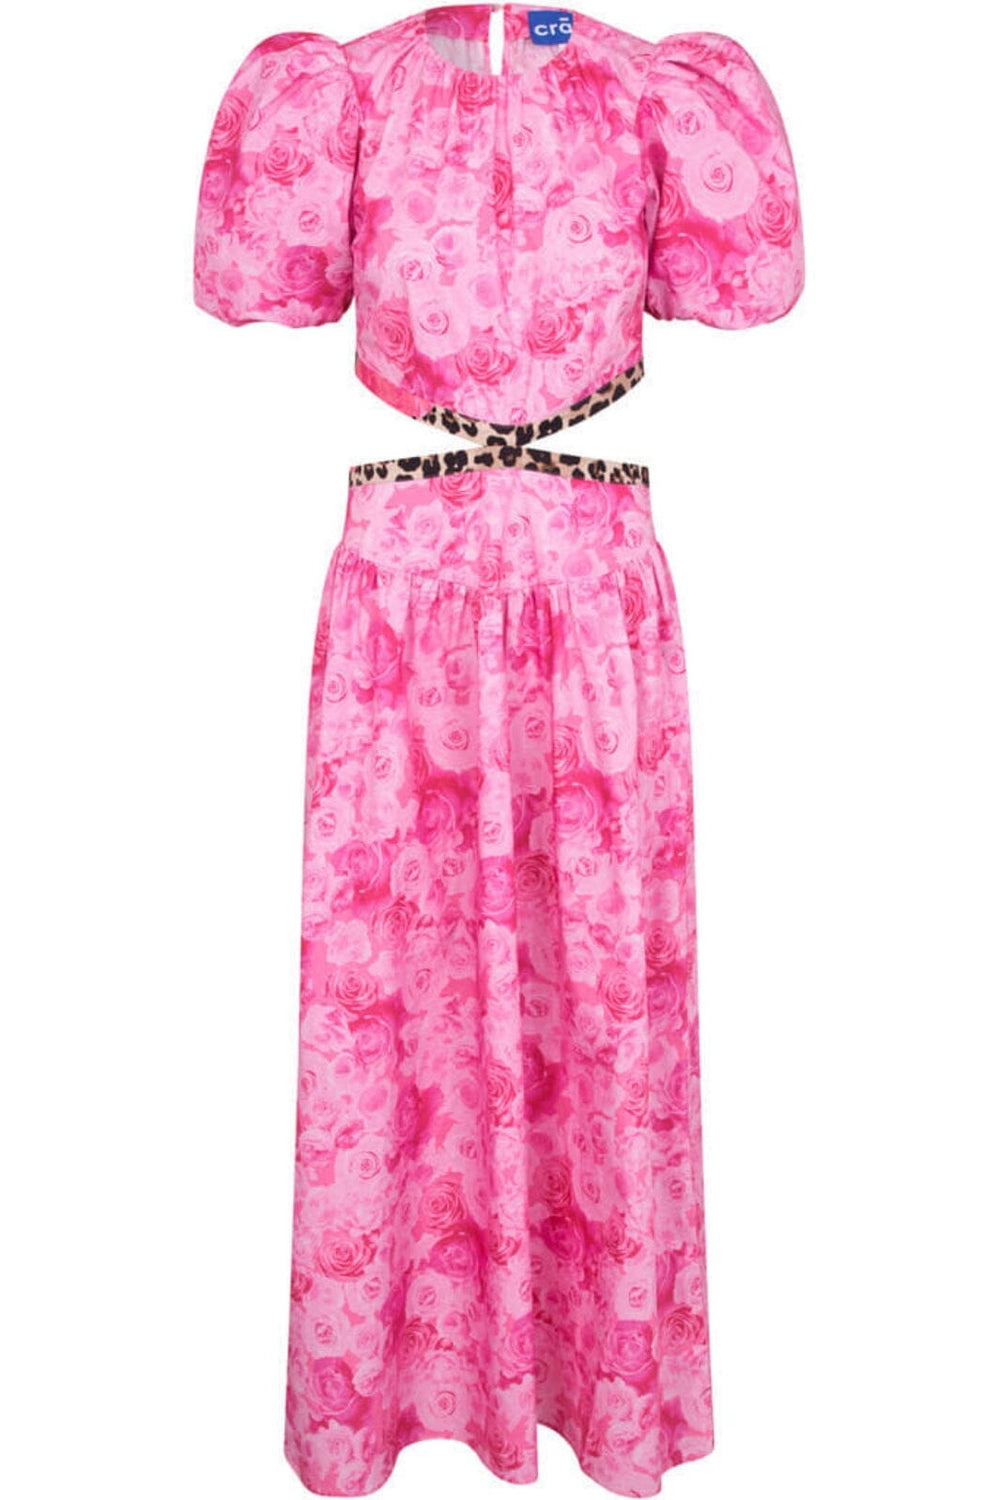 Cras - Lovisacras Dress Pink Rosegarden Kjoler 